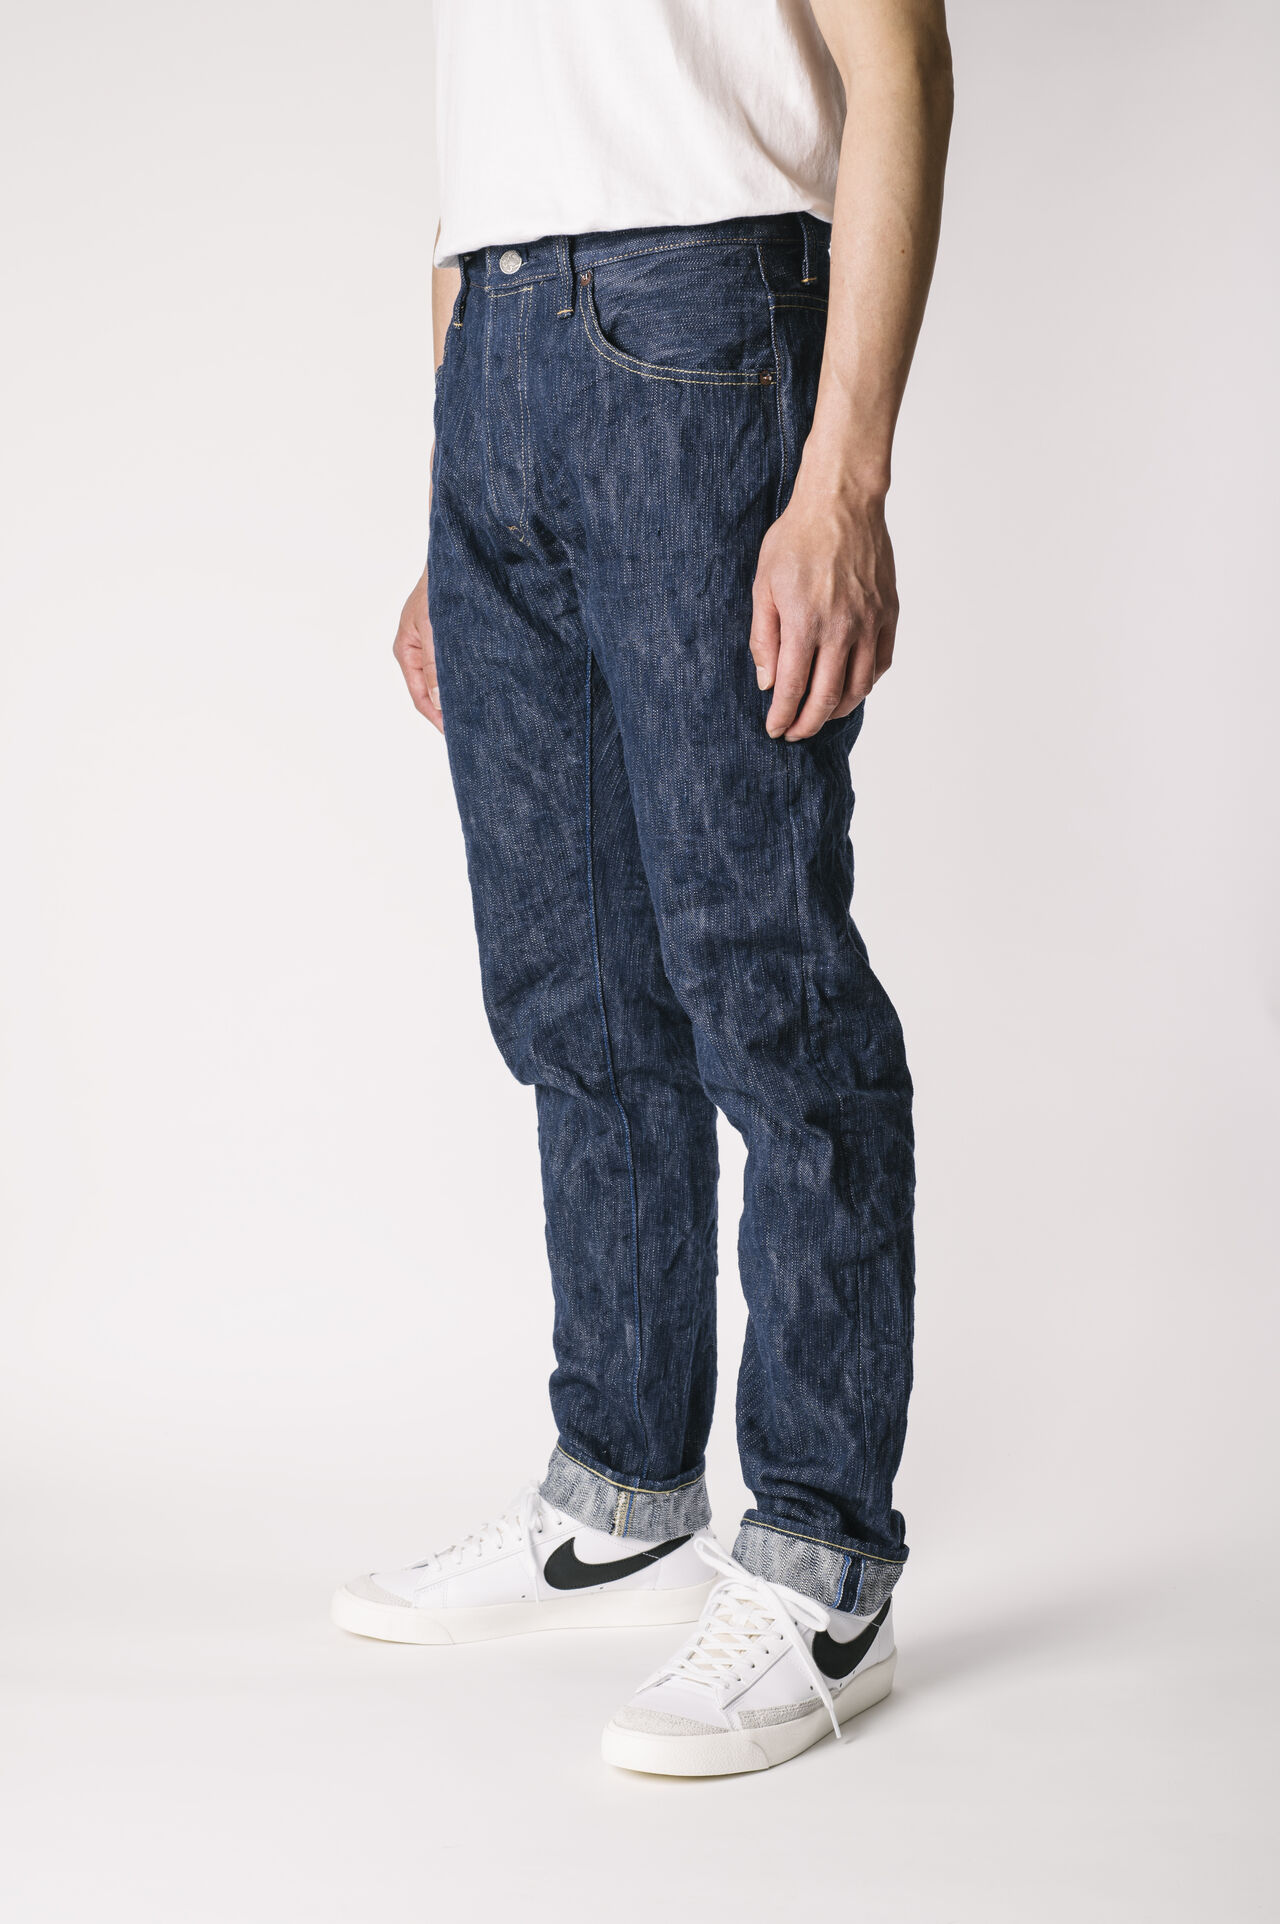 AHT 18oz Shoai "Arashi" High Tapered Jeans,, large image number 3